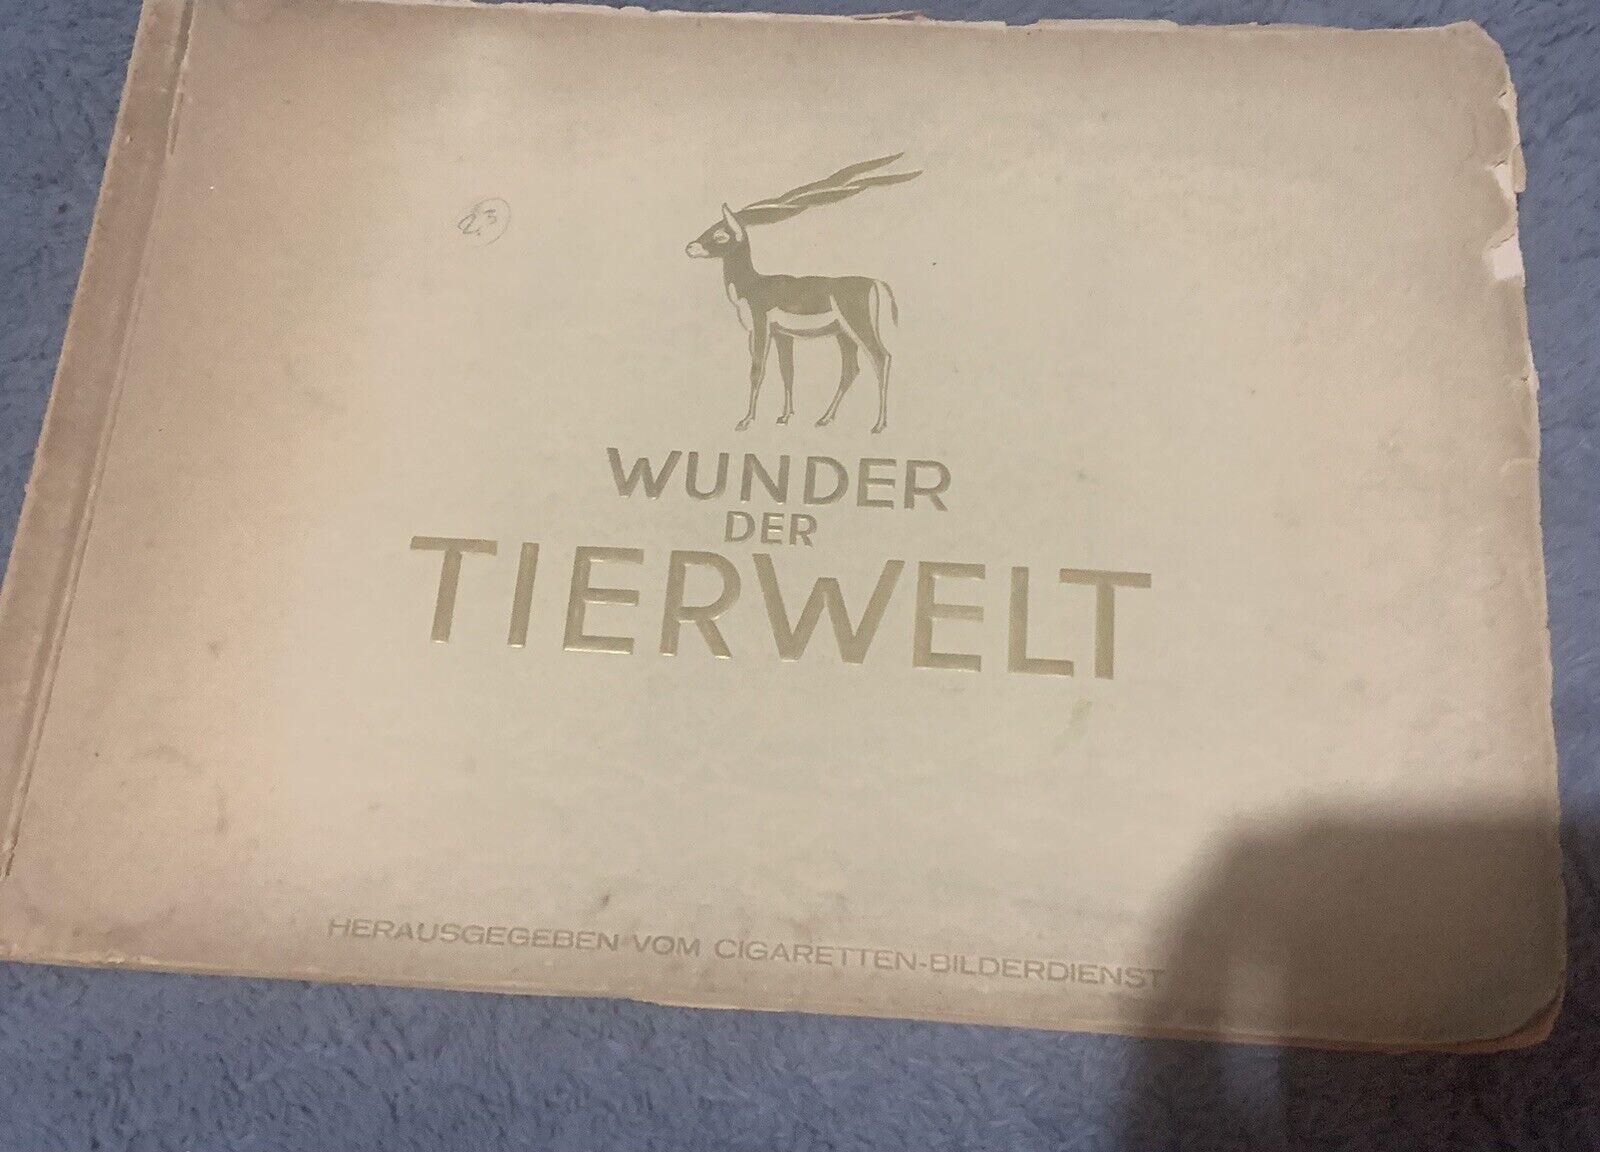 1933 Antique Reemtsma Cigarette Service Album ANIMAL WORLD Complete German